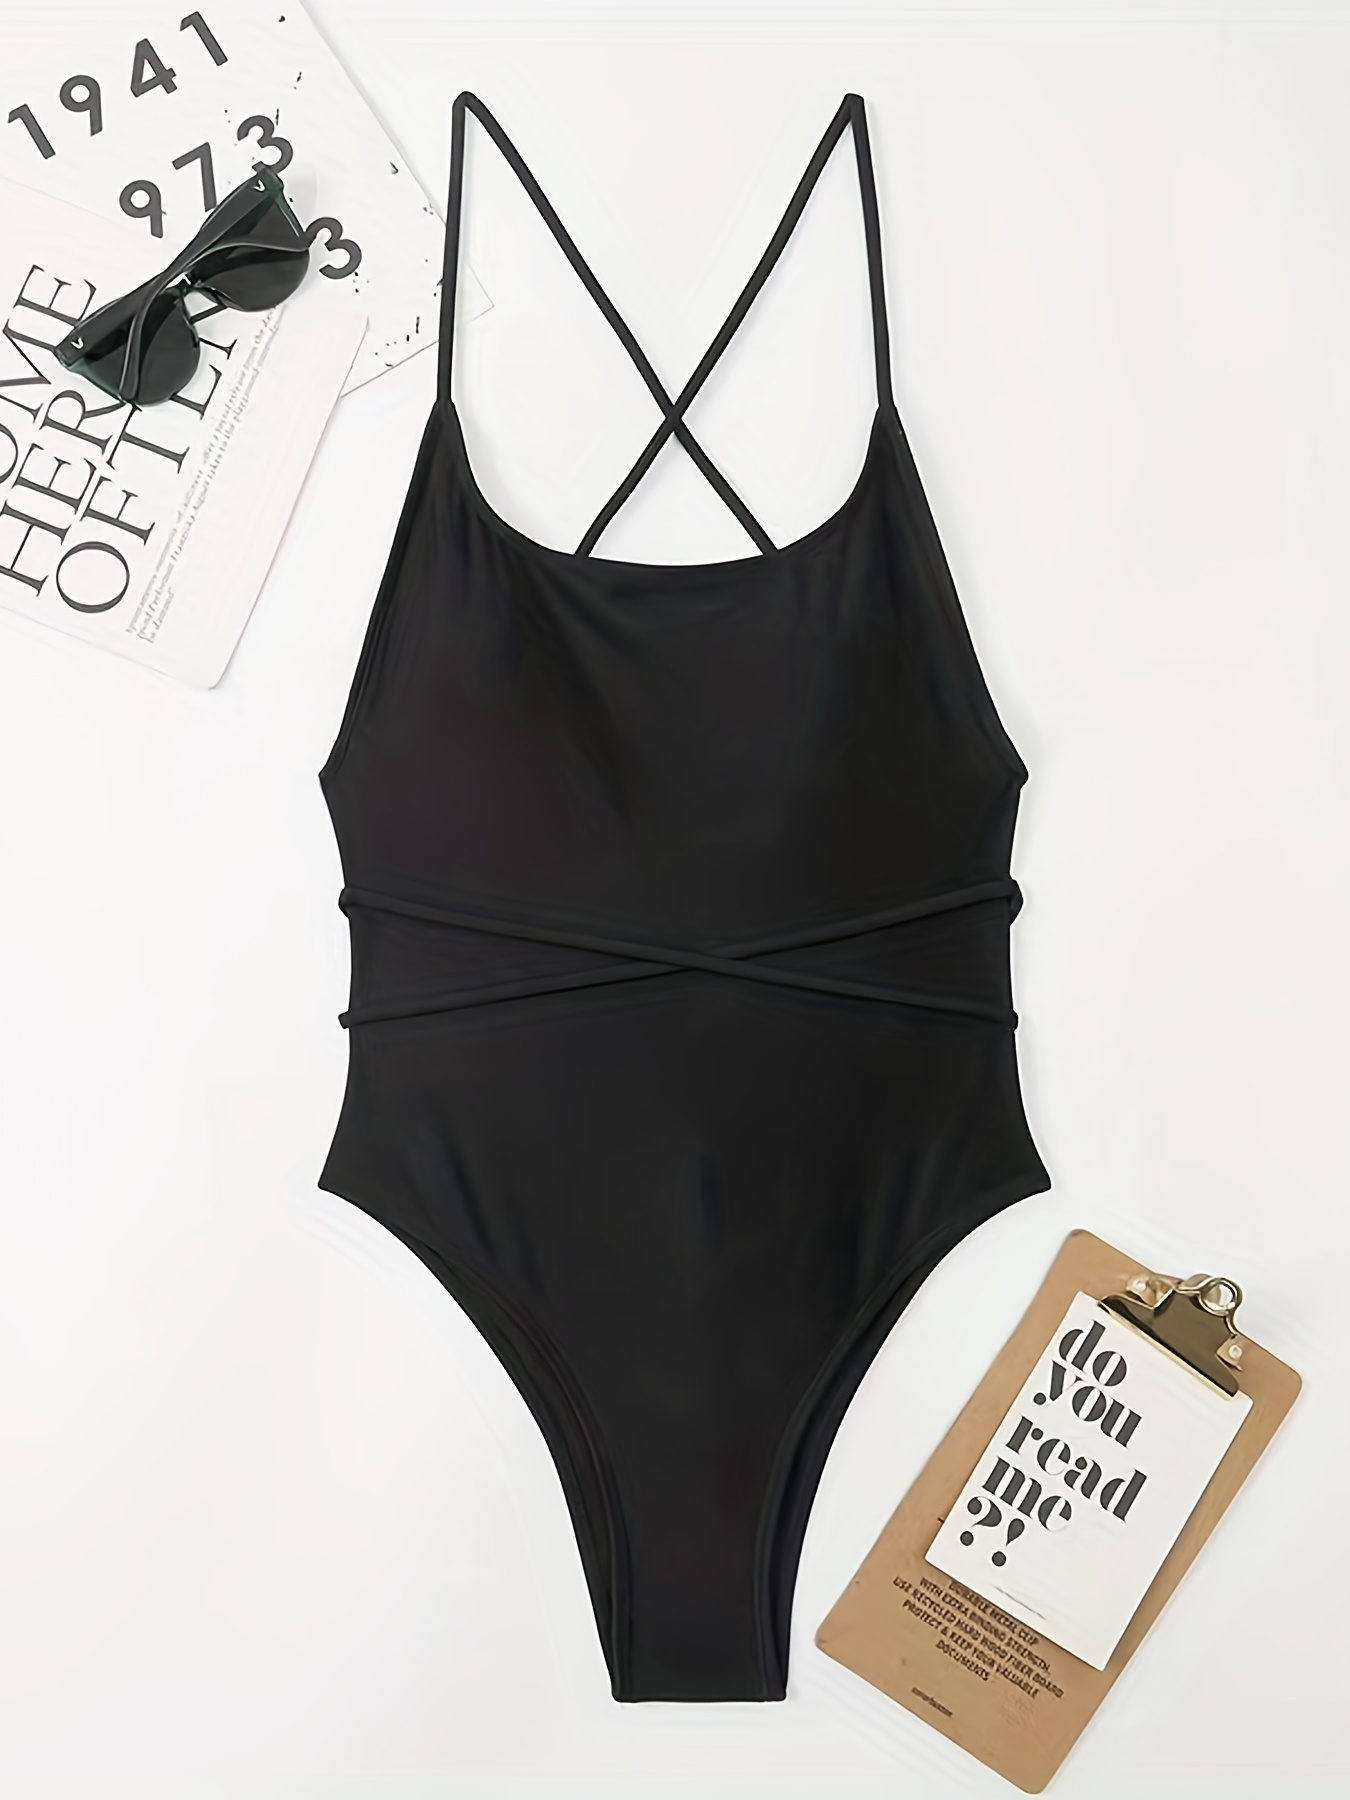 Black Tummy Control Swimsuit, One-Piece Cross Strap Bathing Suit With Sheer  Line Design, Elegant & Slimming, Women's Shapewear & Swimwear